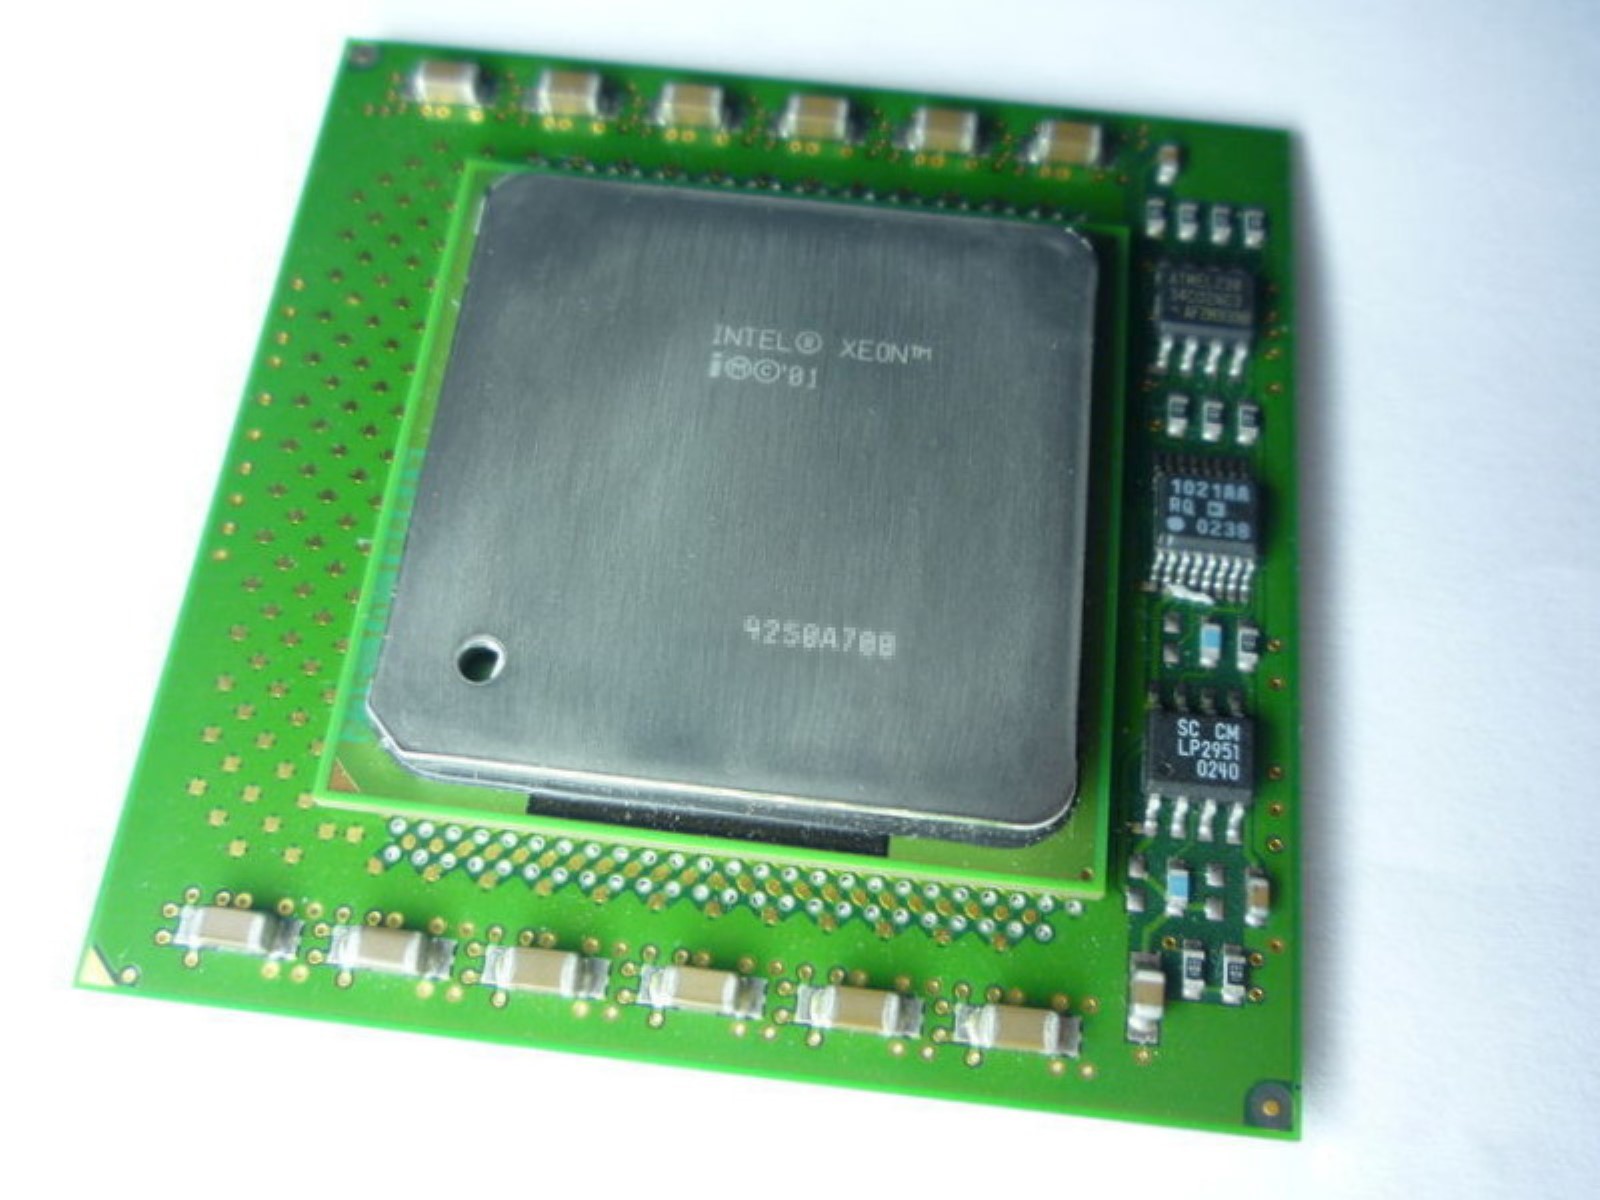 Intel Xeon 603 2.4GHz CPU